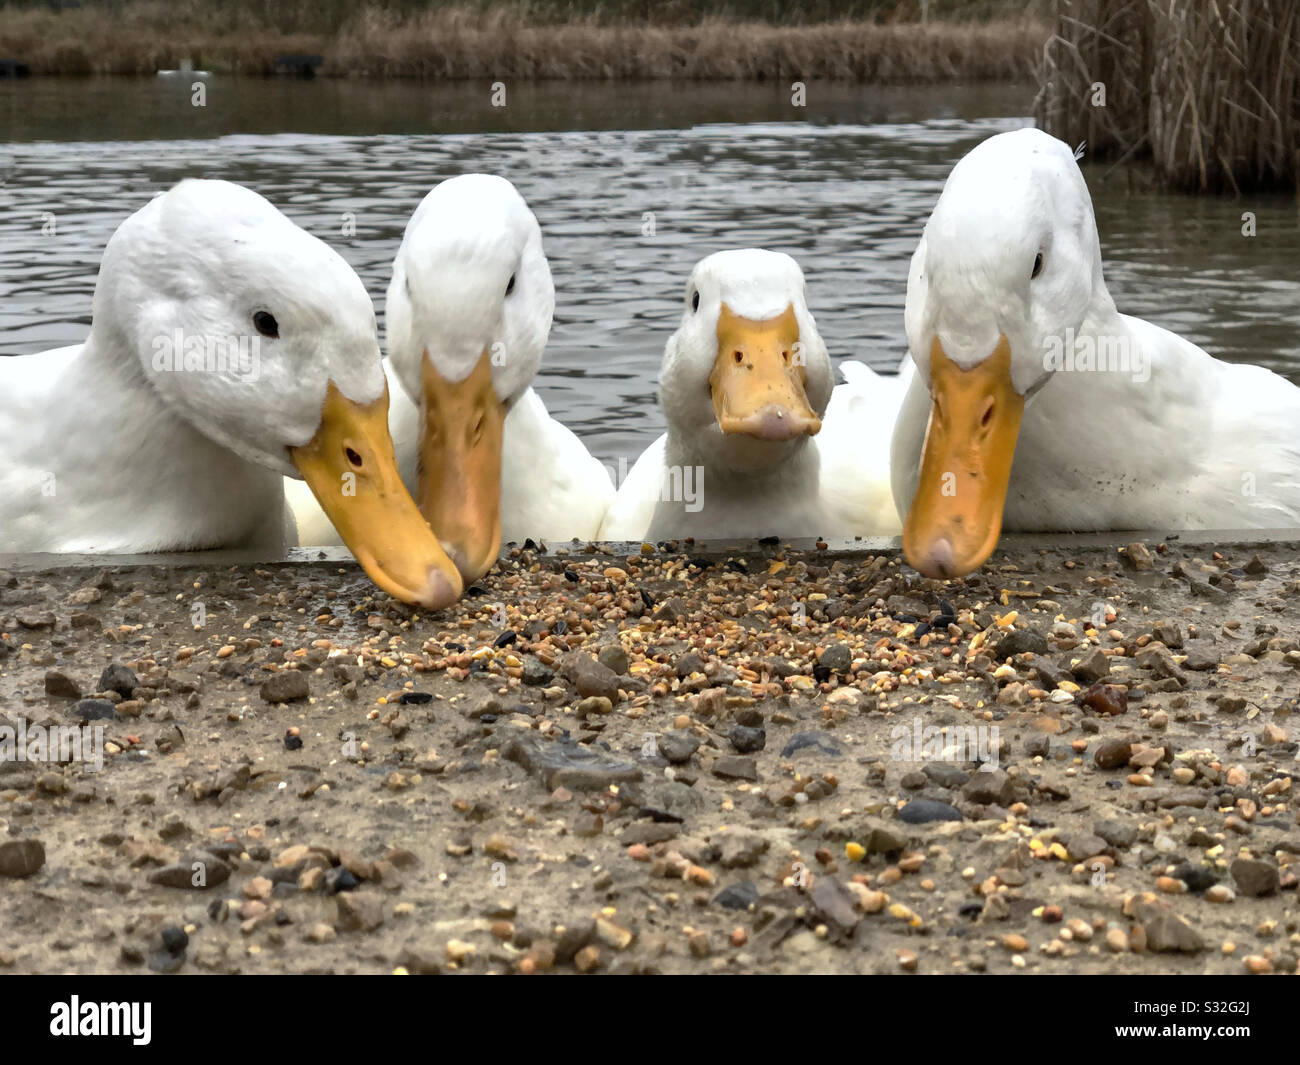 White Pekin ducks searching for food Stock Photo